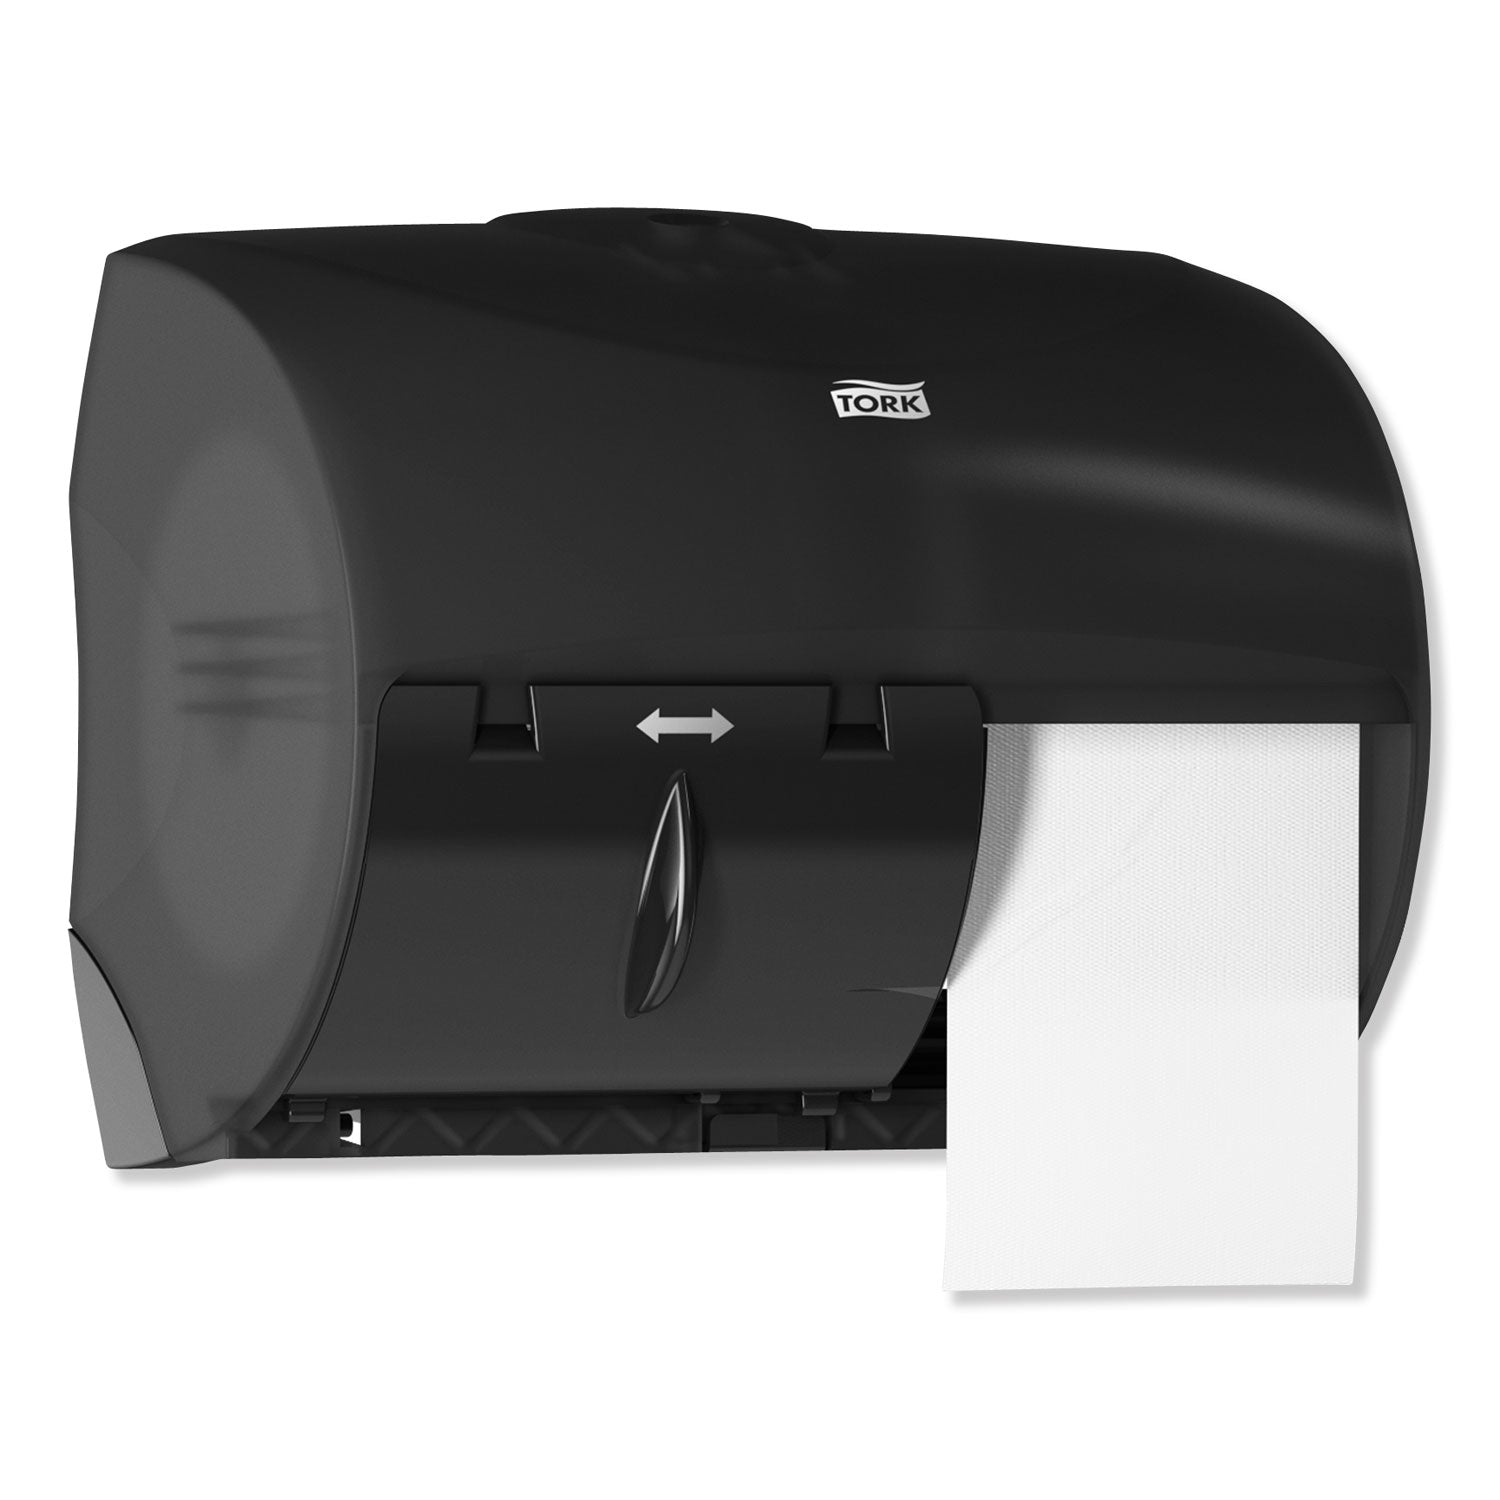 twin-bath-tissue-roll-dispenser-for-opticore-1106-x-718-x-881-black_trk565728 - 2